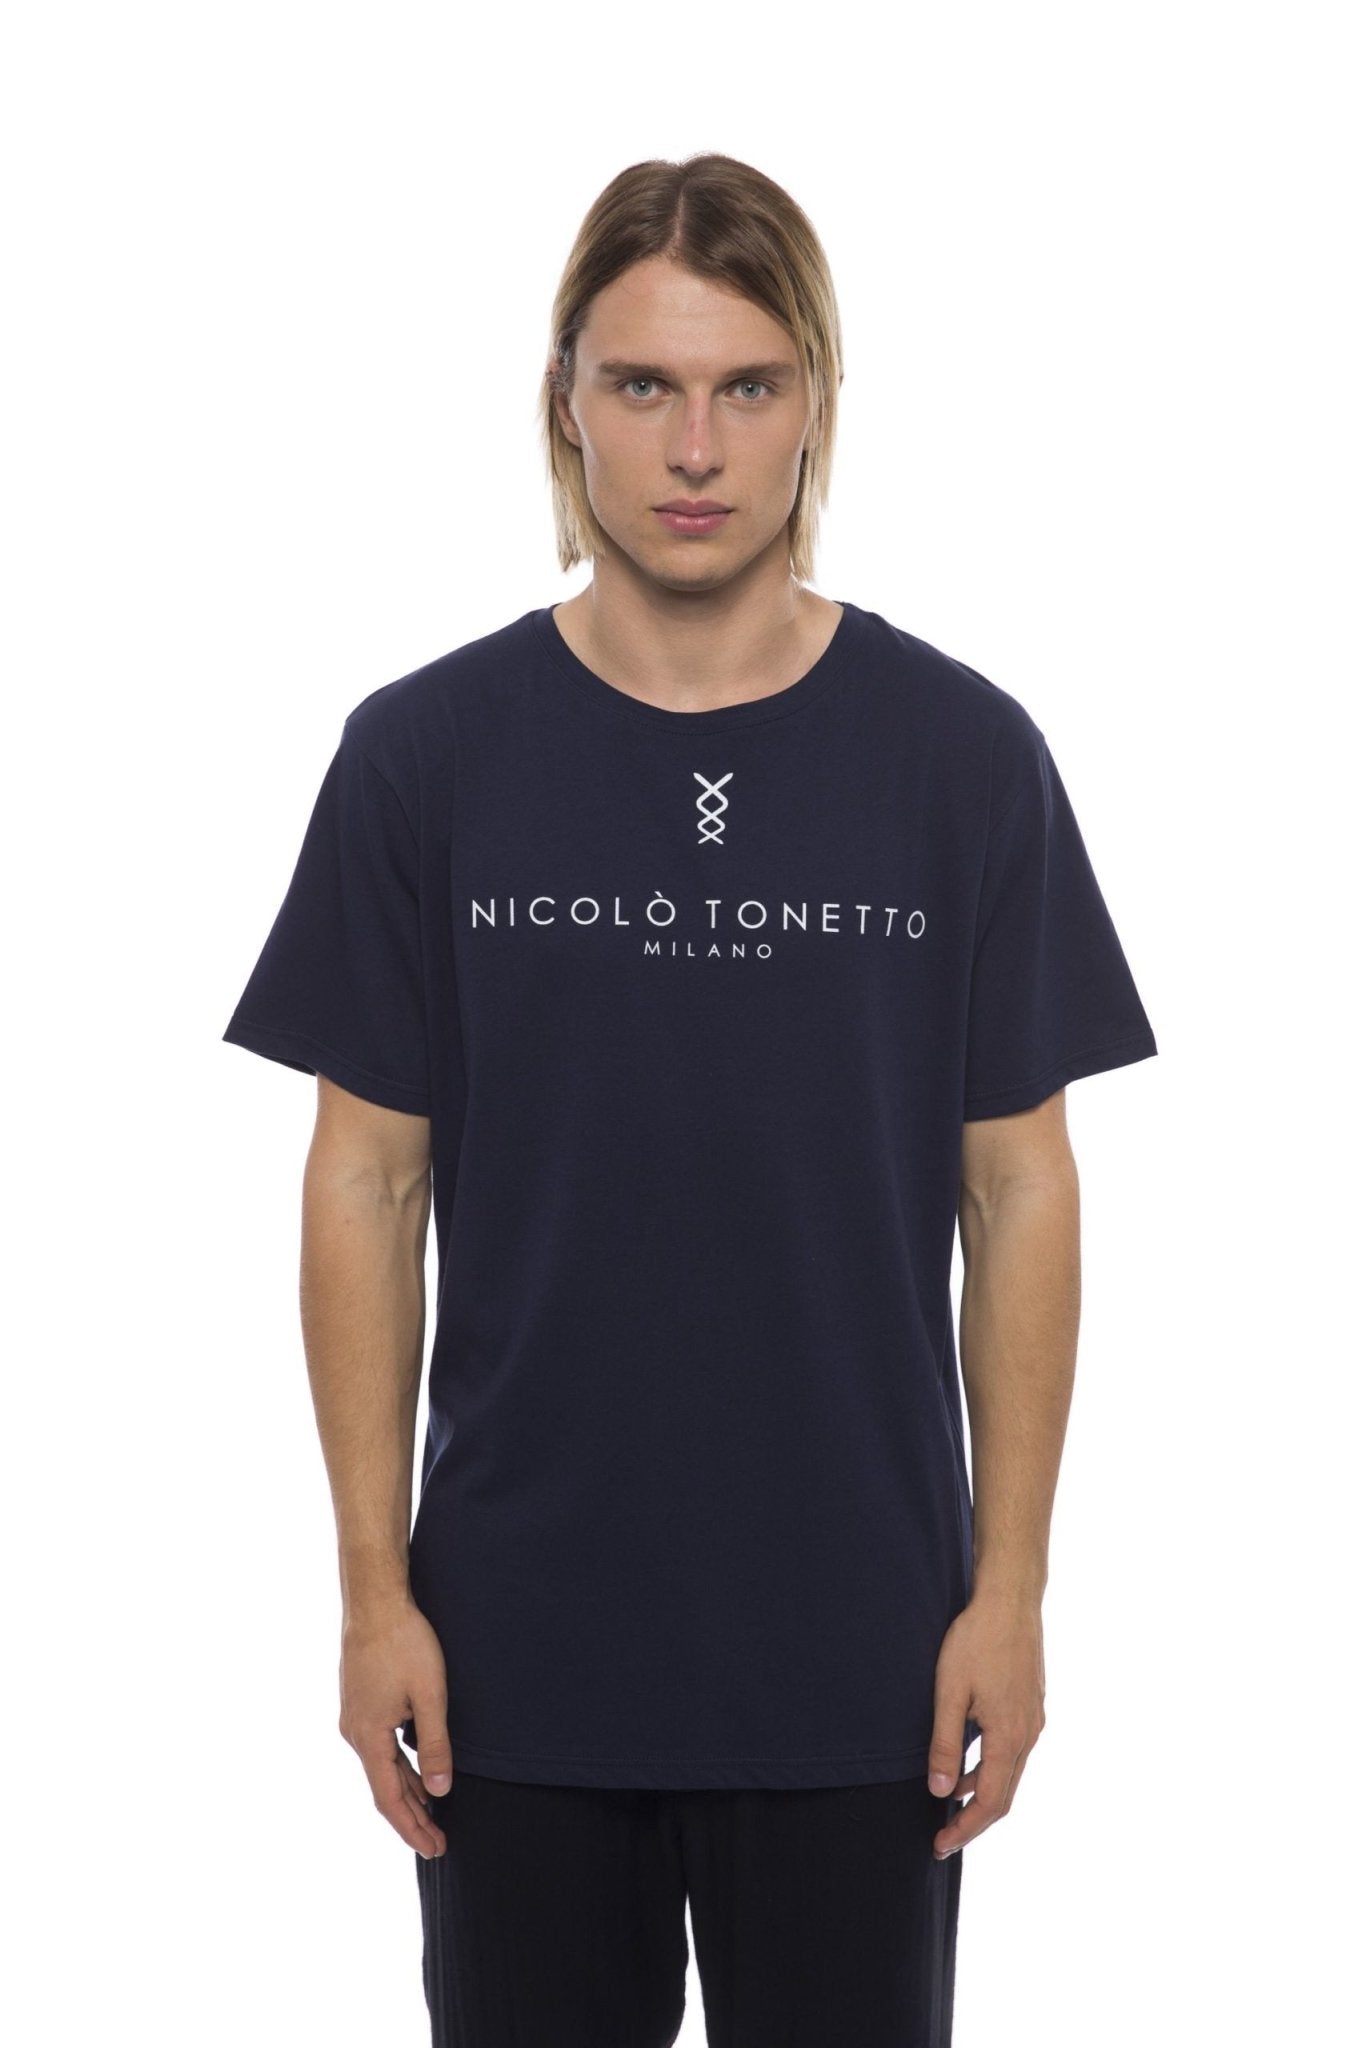 Nicolo Tonetto Blue Cotton T-Shirt - Fizigo